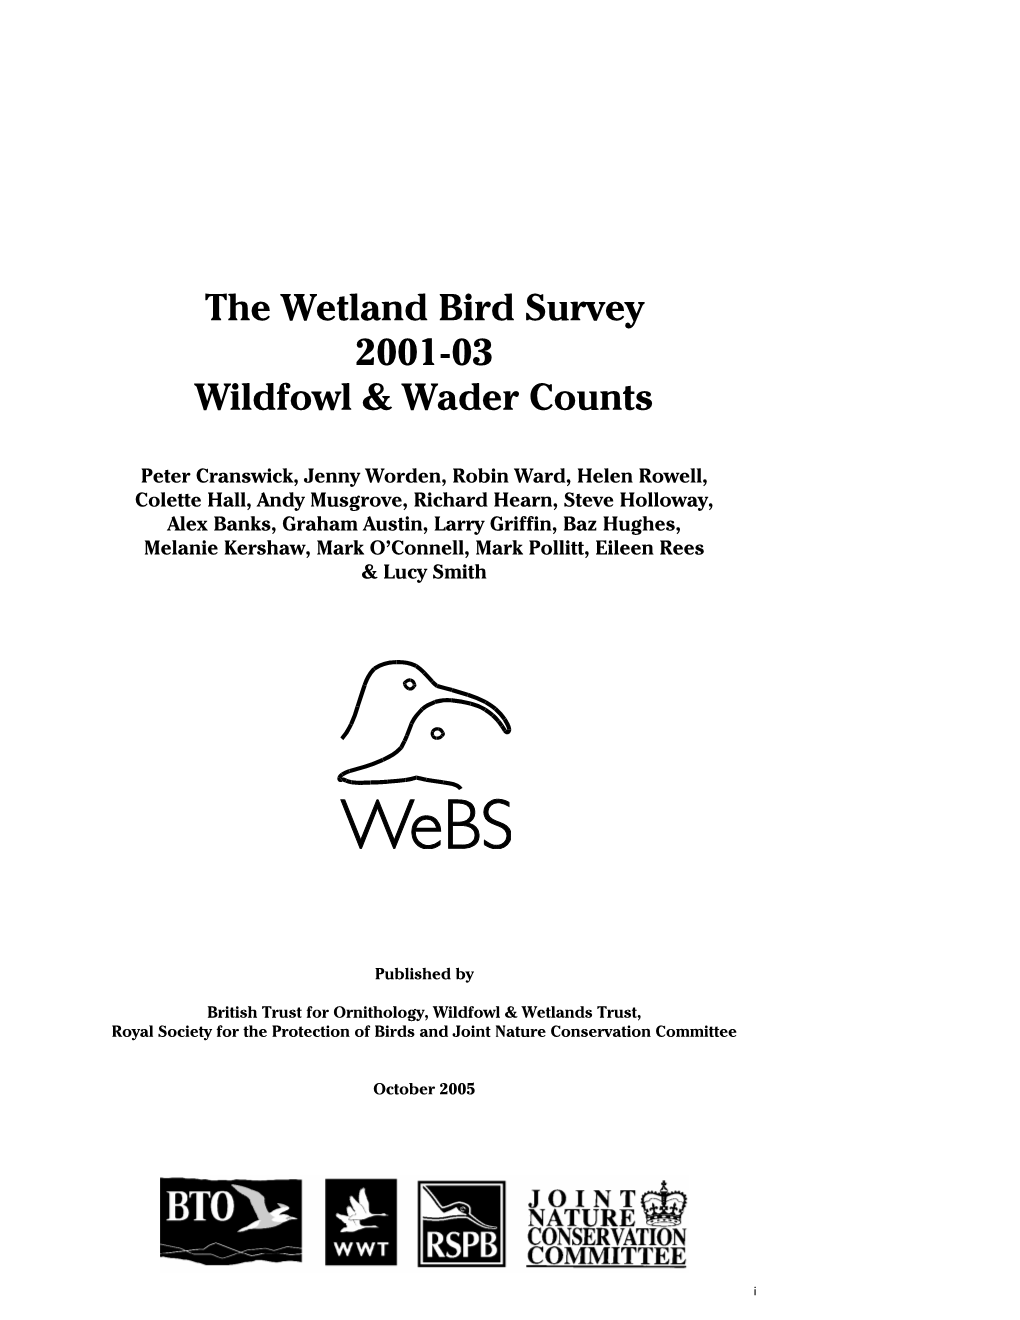 The Wetland Bird Survey 2001-03 Wildfowl & Wader Counts